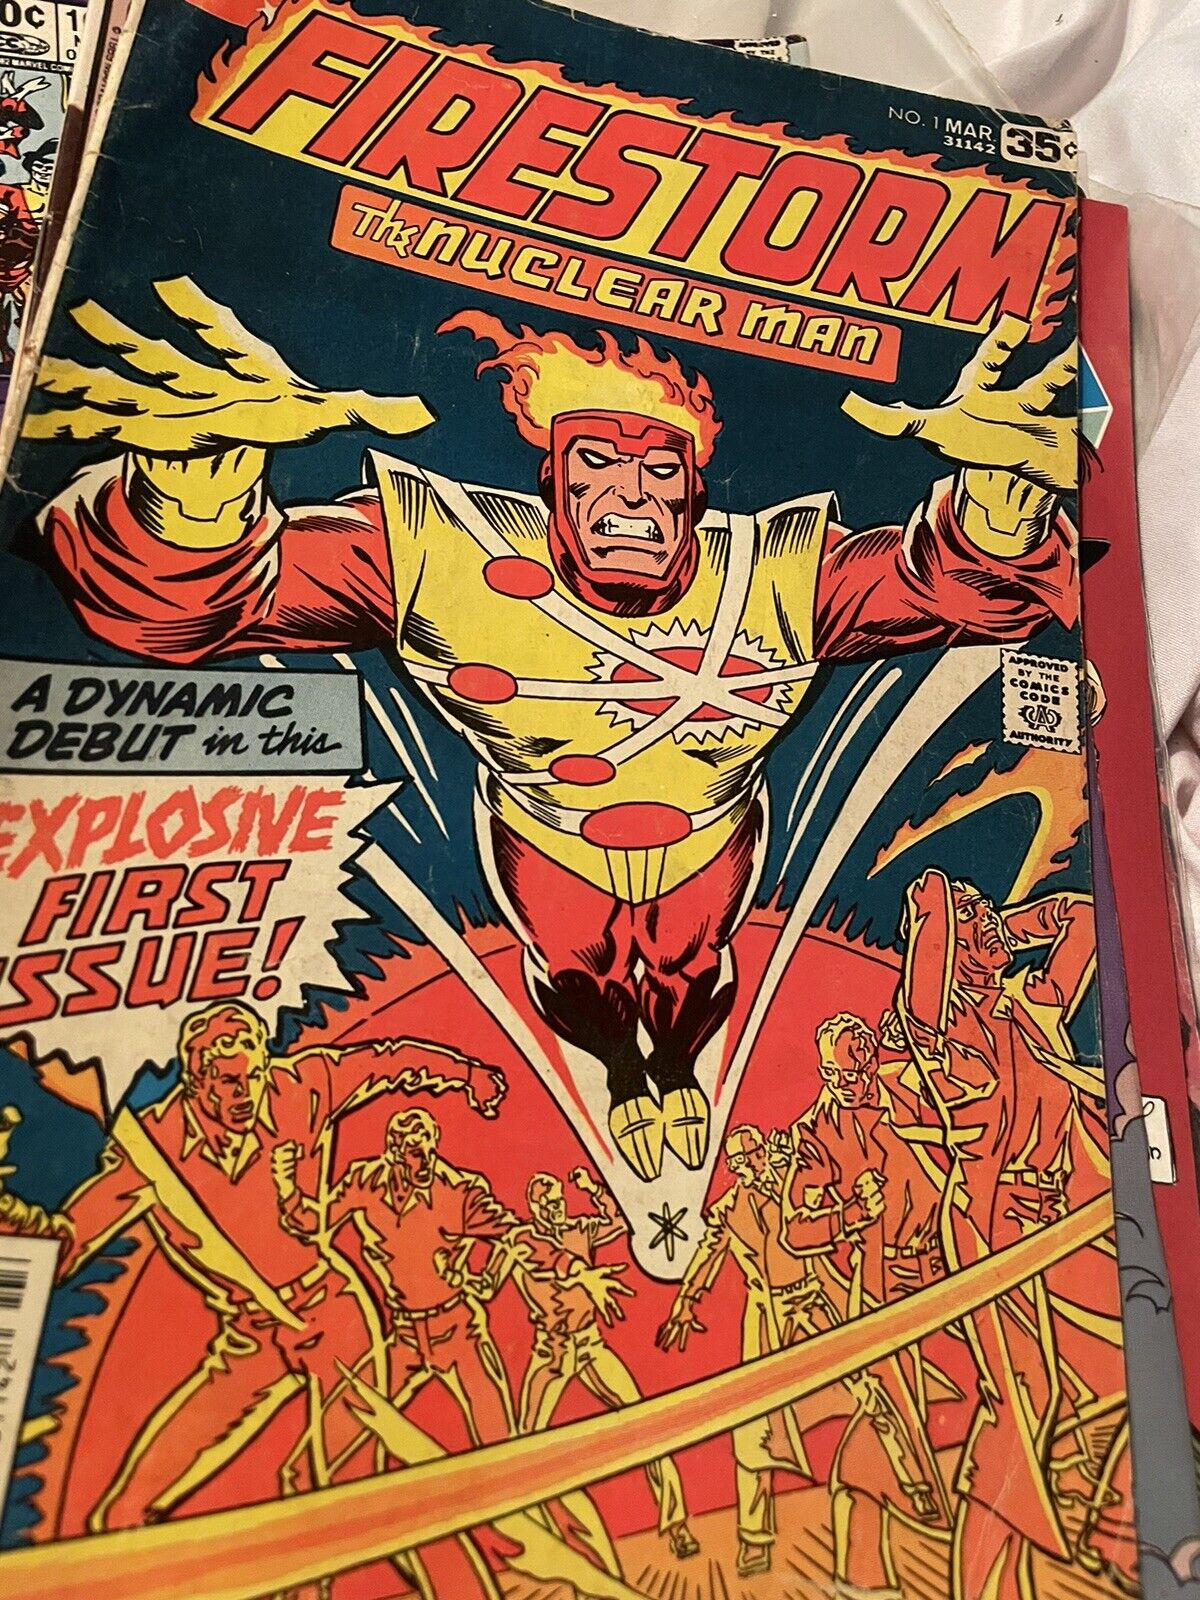 Firestorm the Nuclear Man #1 March 1978 1st Appearance & Origin Newsstand Copy